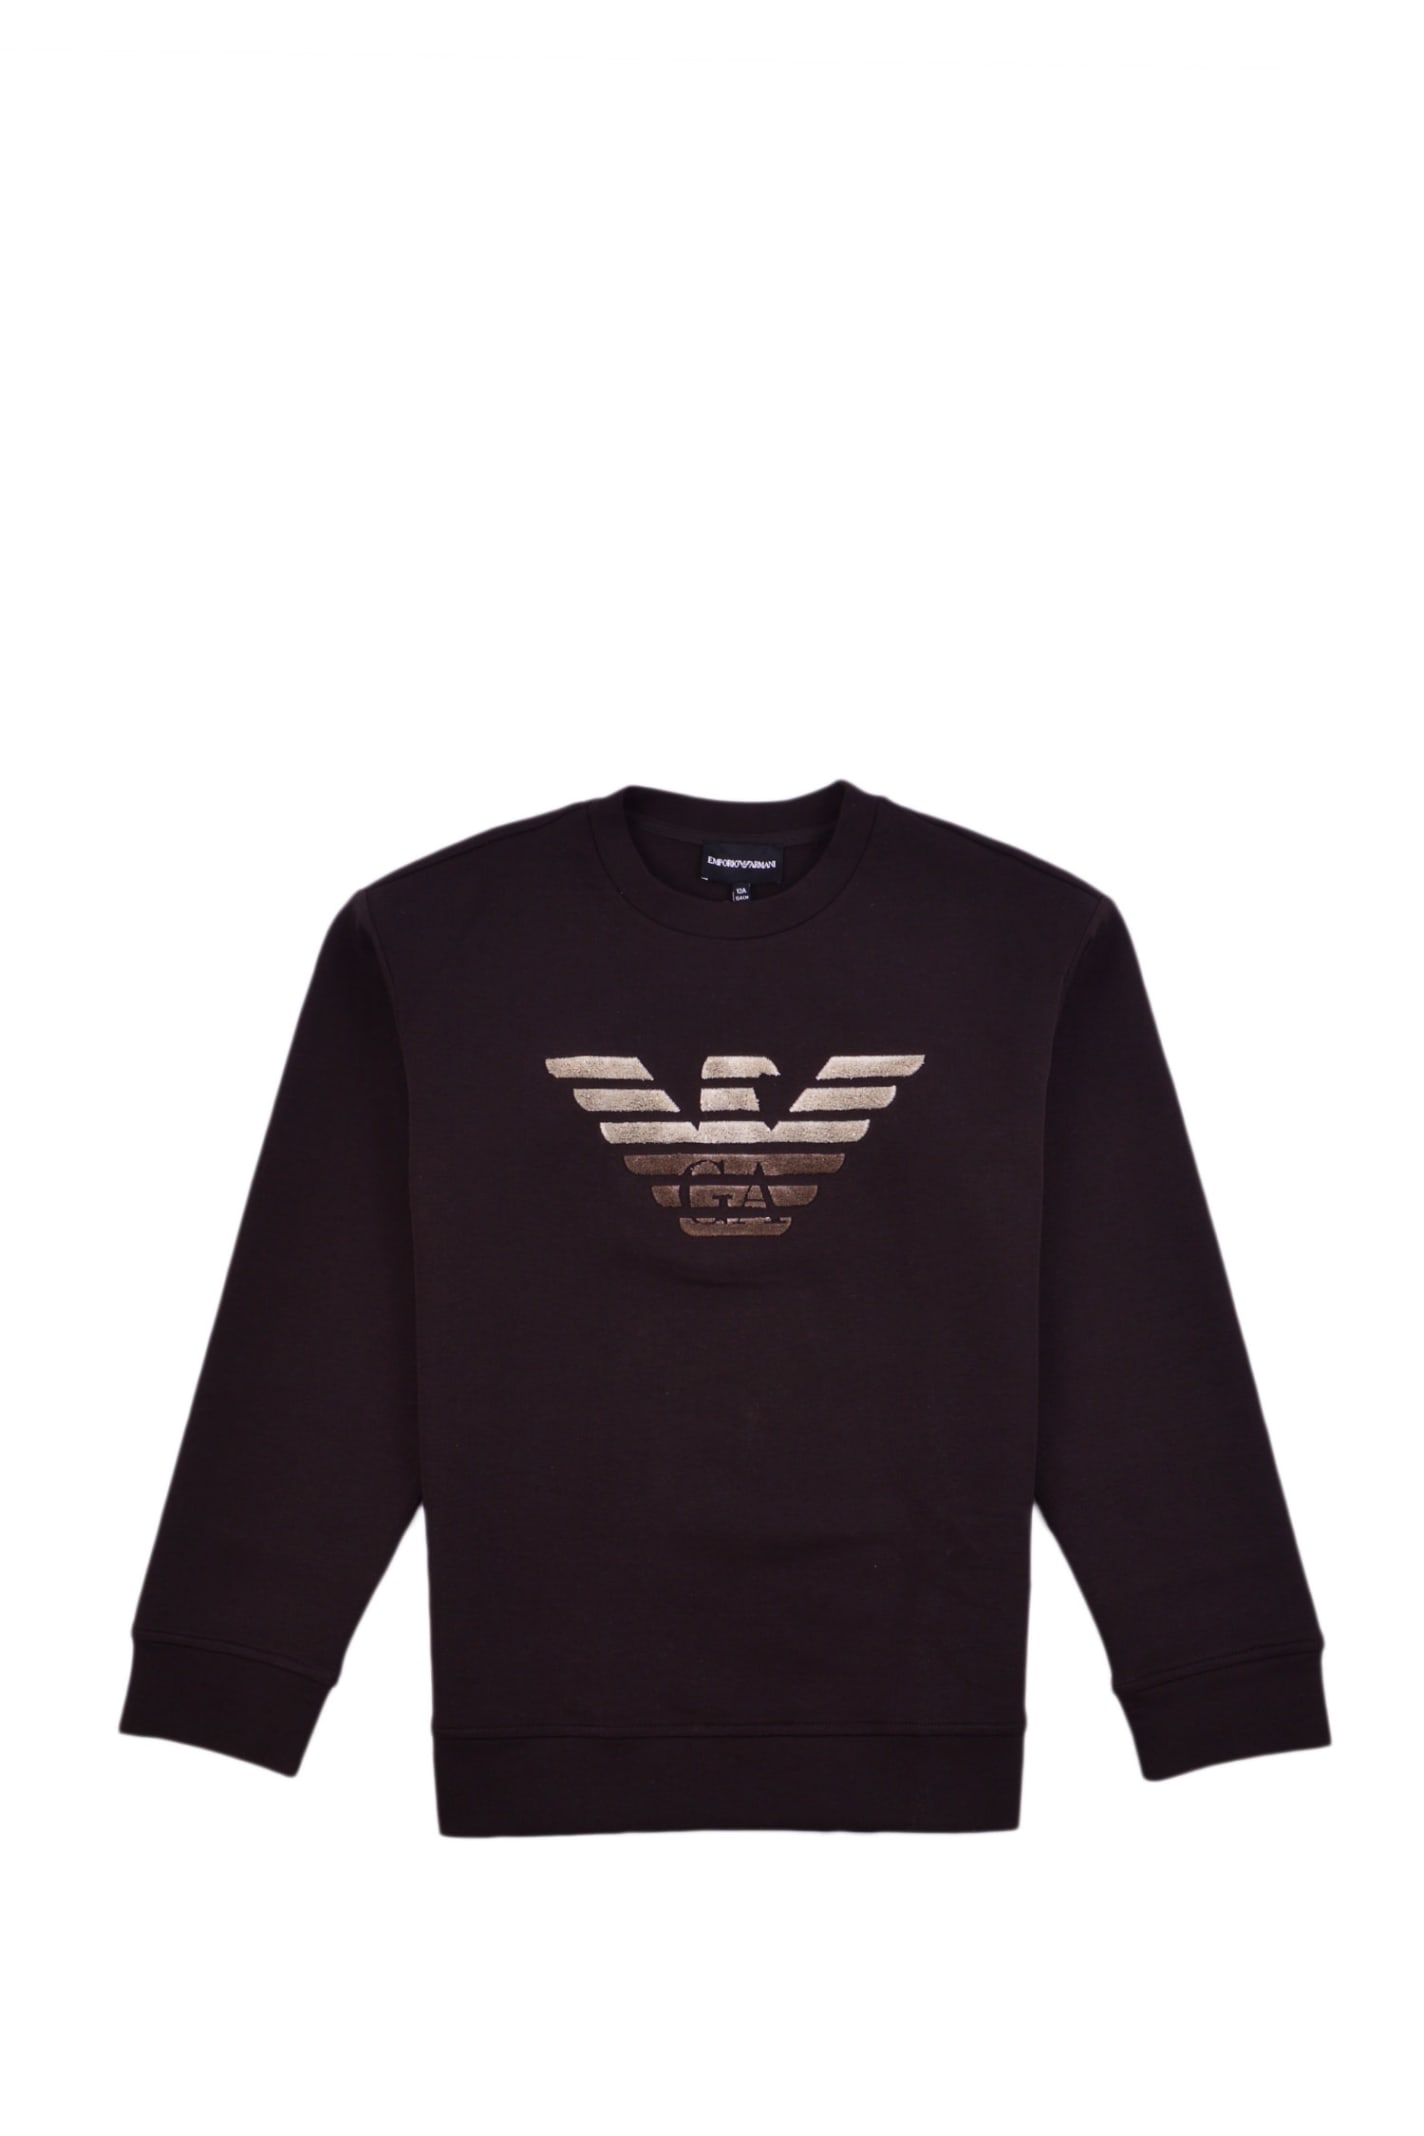 Emporio Armani Sweatshirt With Felt Logo